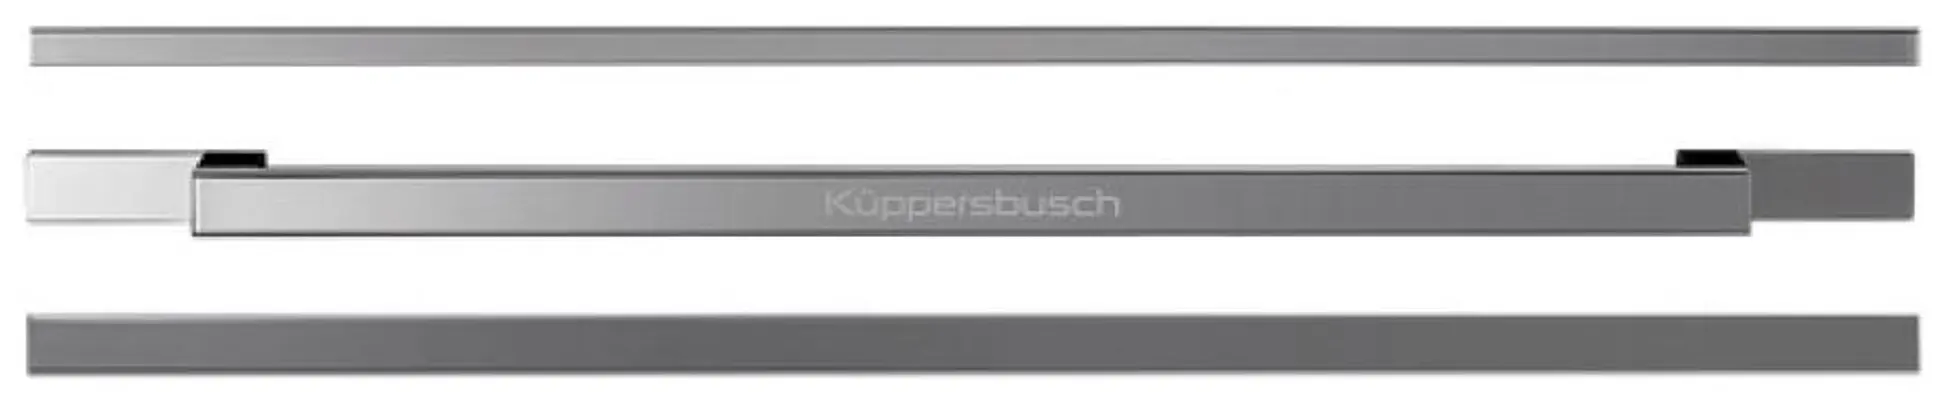 DK3004-Kuppersbusch-Koel-vries-accessoires